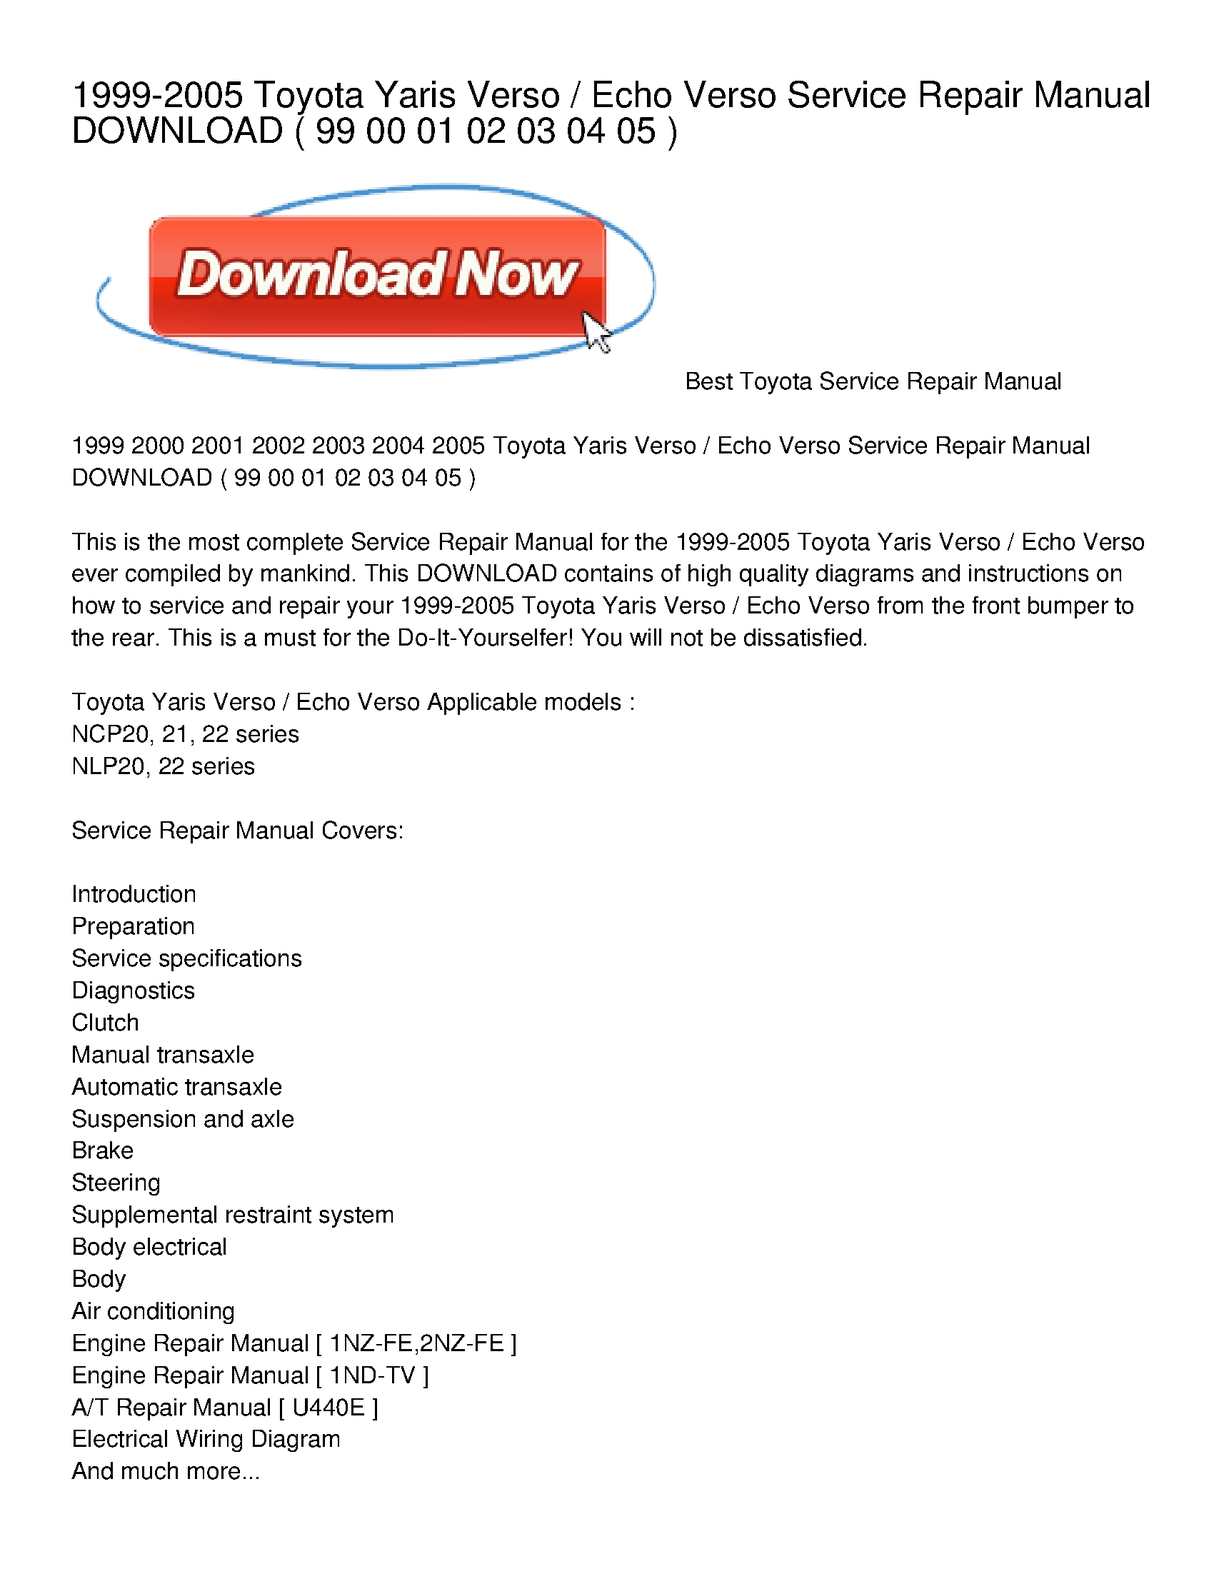 Toyota Yaris Software Download